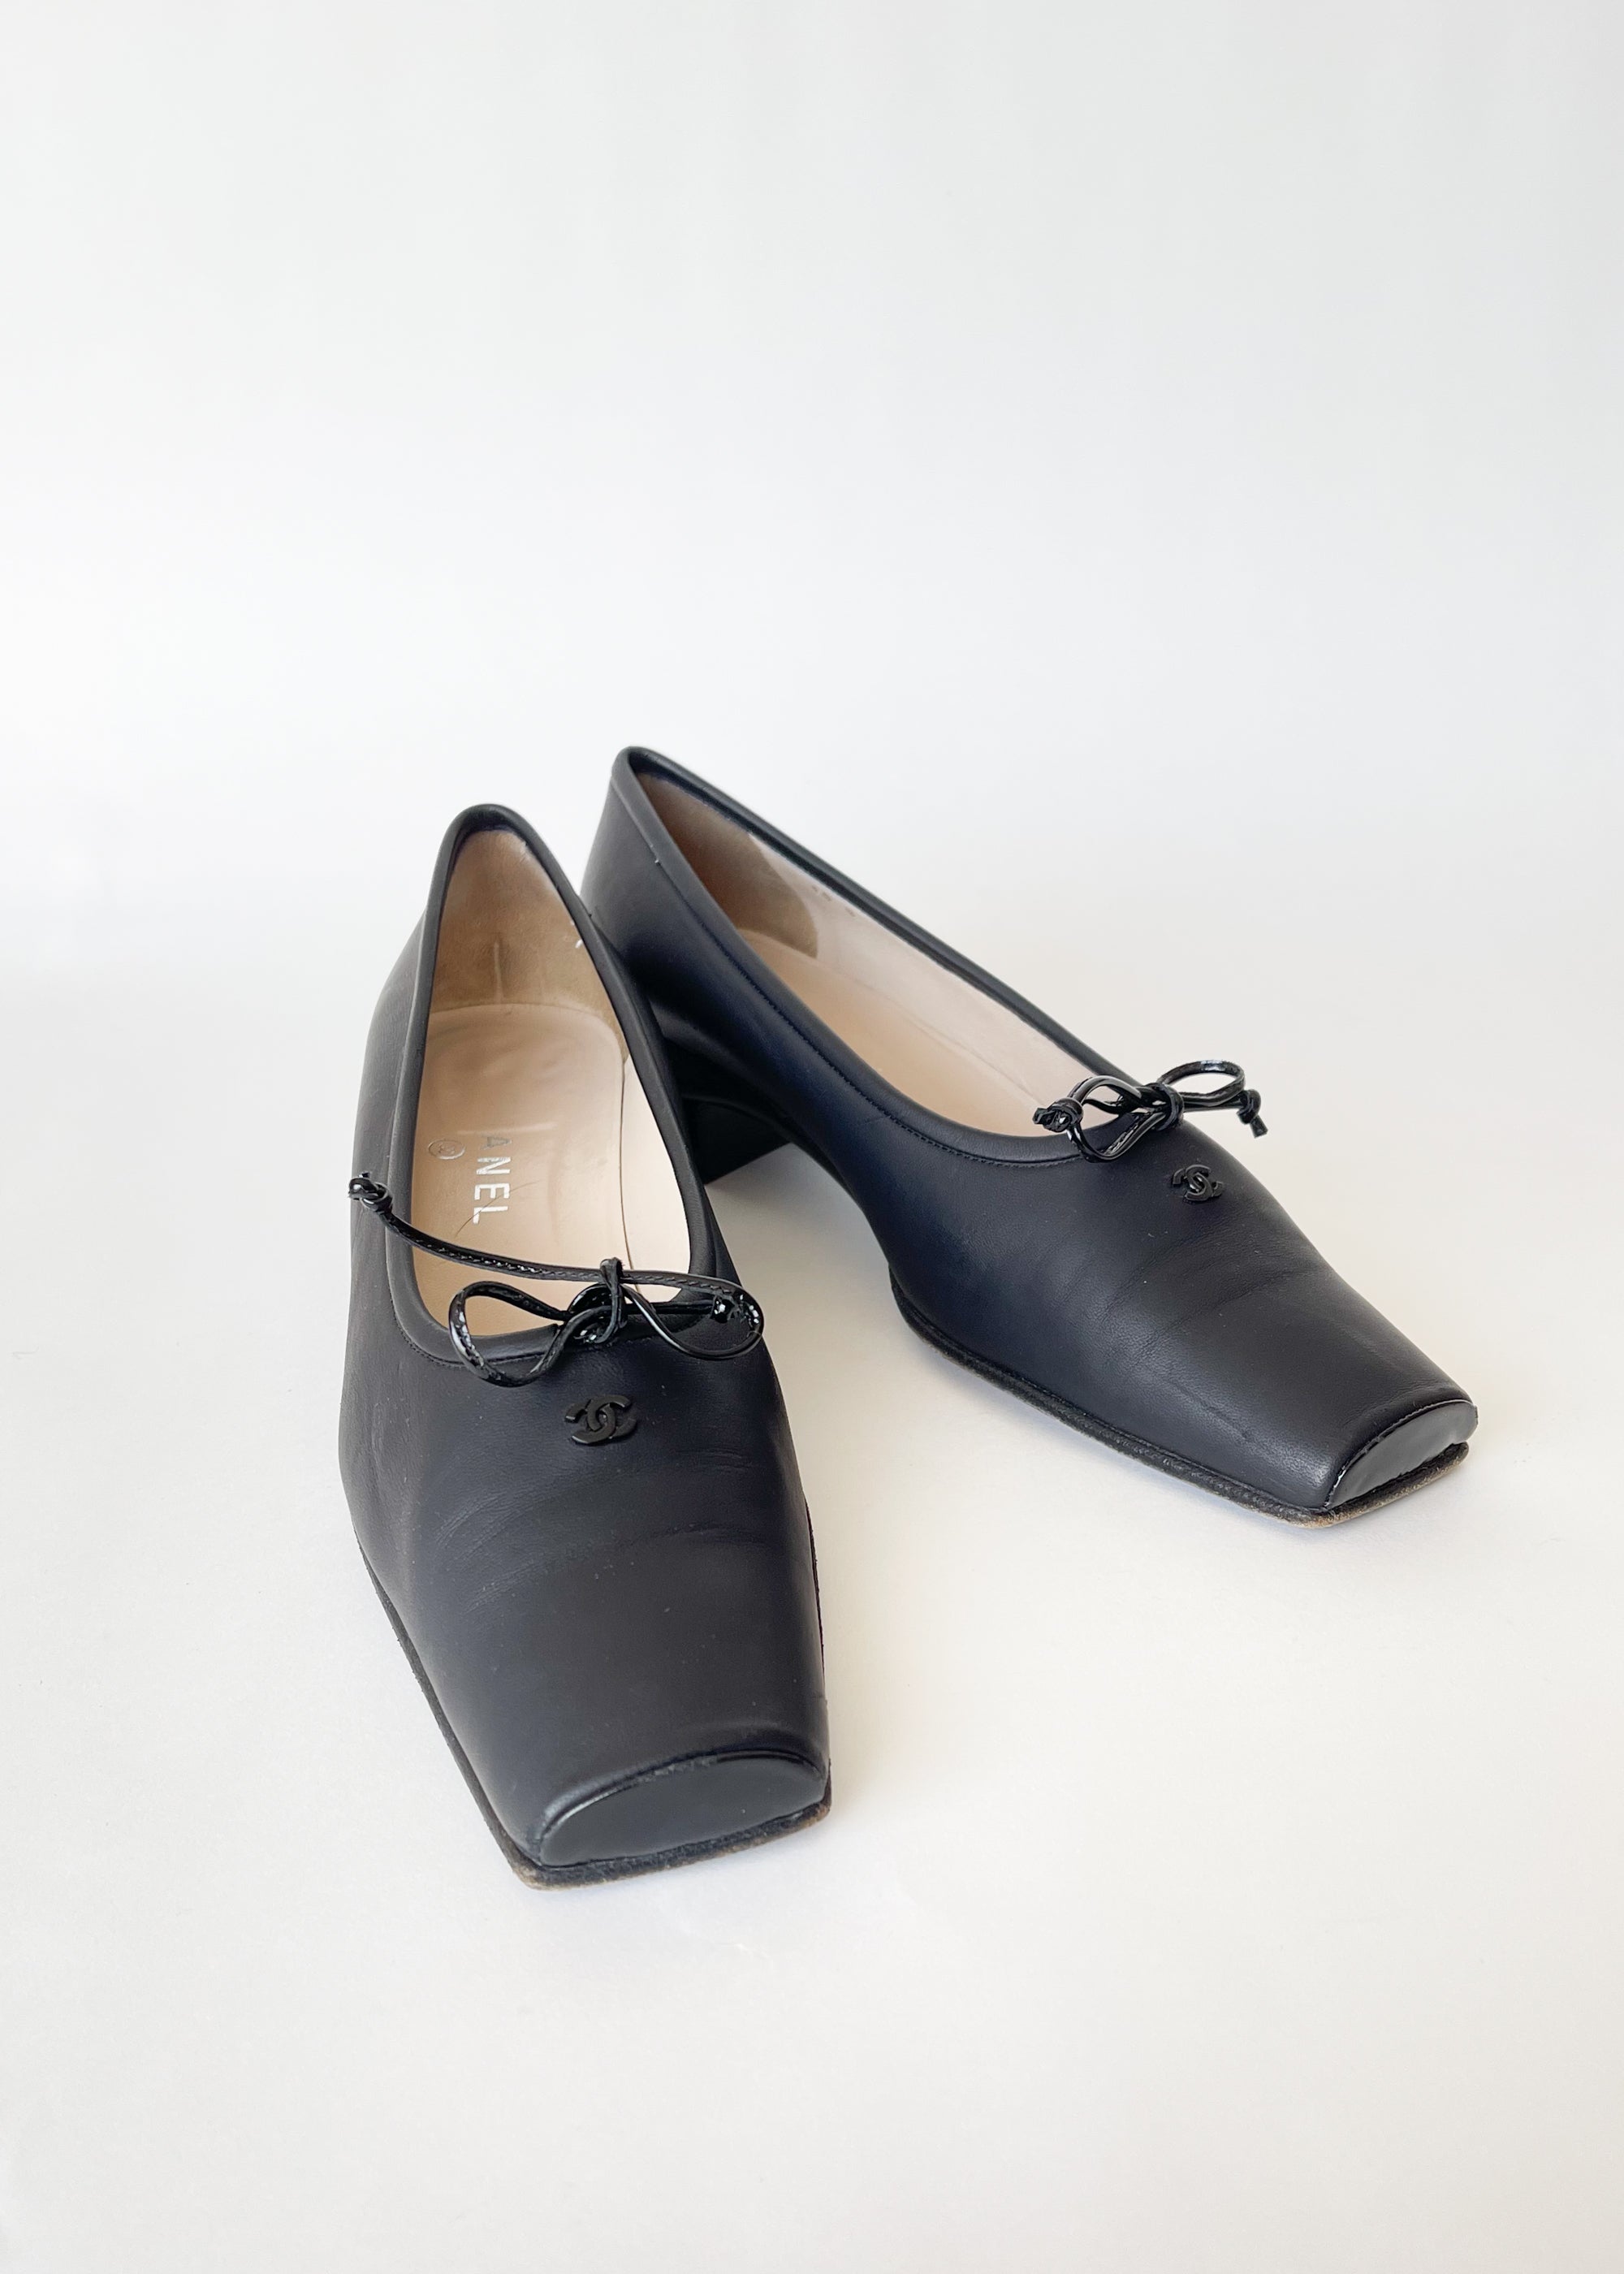 vintage chanel ballerina shoes